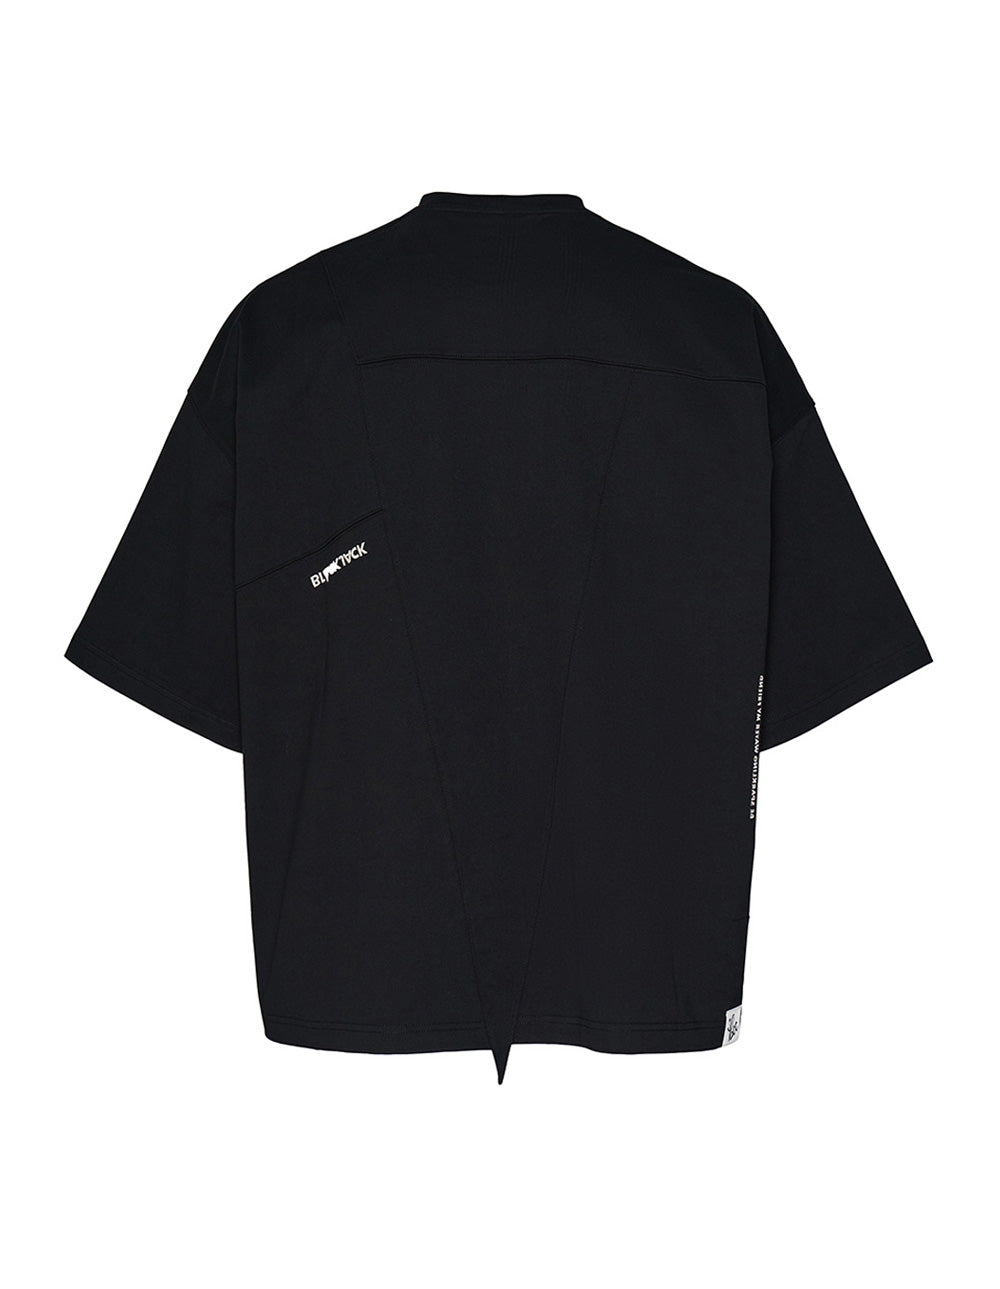 Biggy Patchwork T-Shirt (Black)